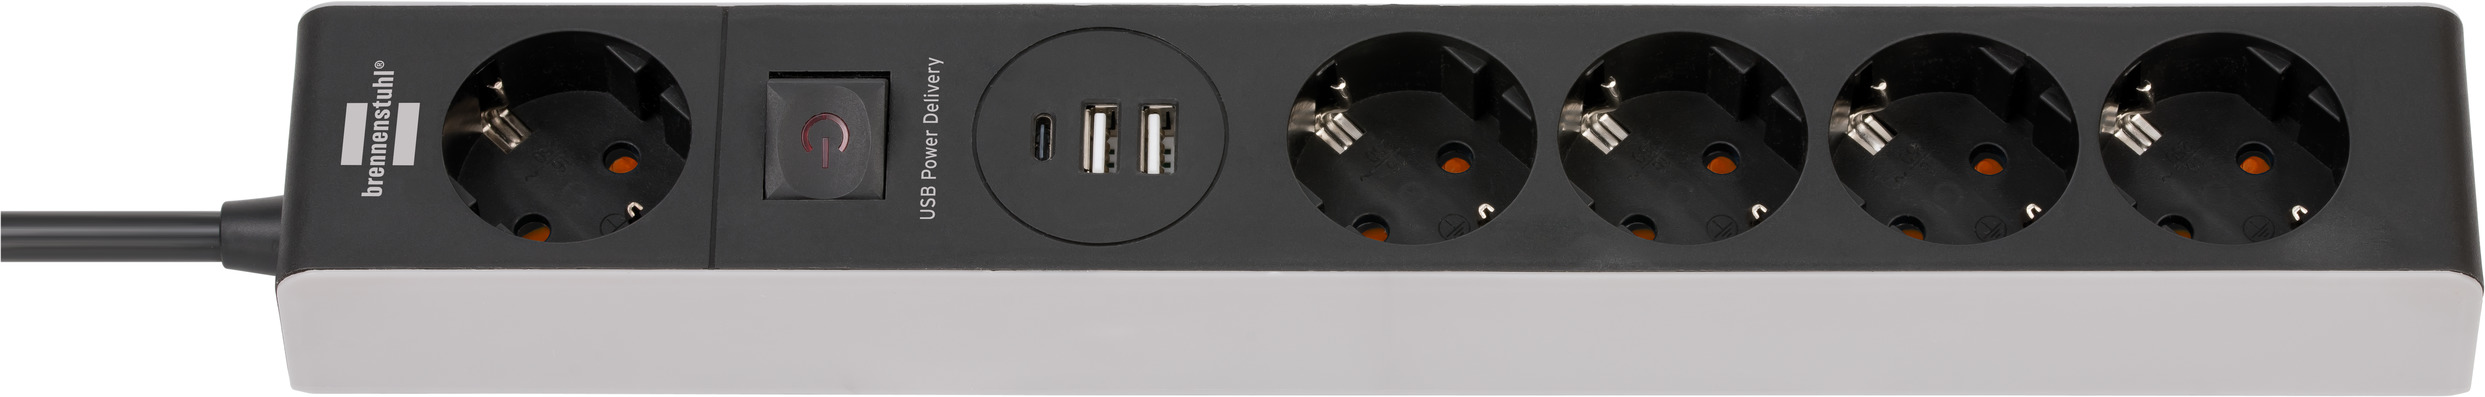 Steckdosenleiste USB C Power Delivery 5-fach grau/schwarz